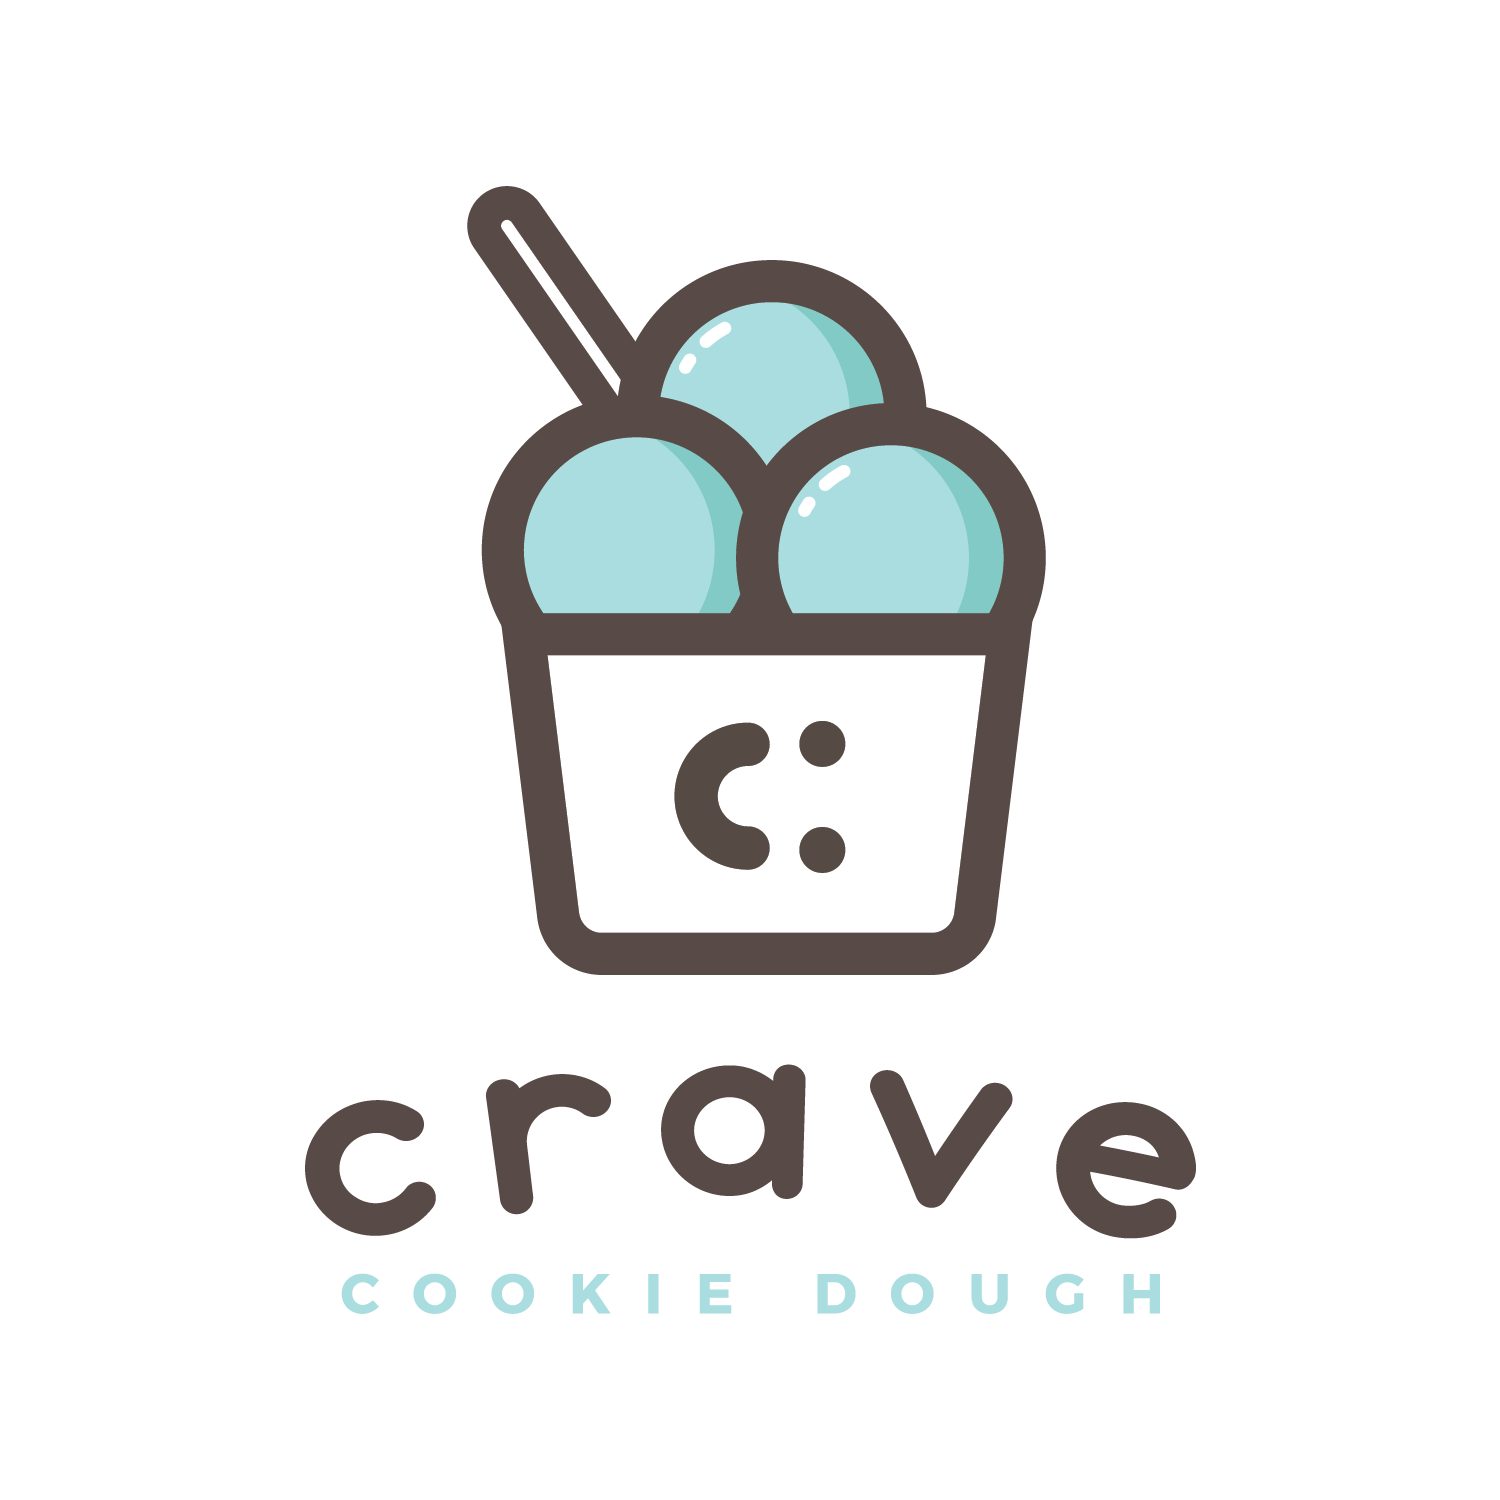 Dough Logo - Crave Cookie Dough Logo FINAL 01 Little Theatre